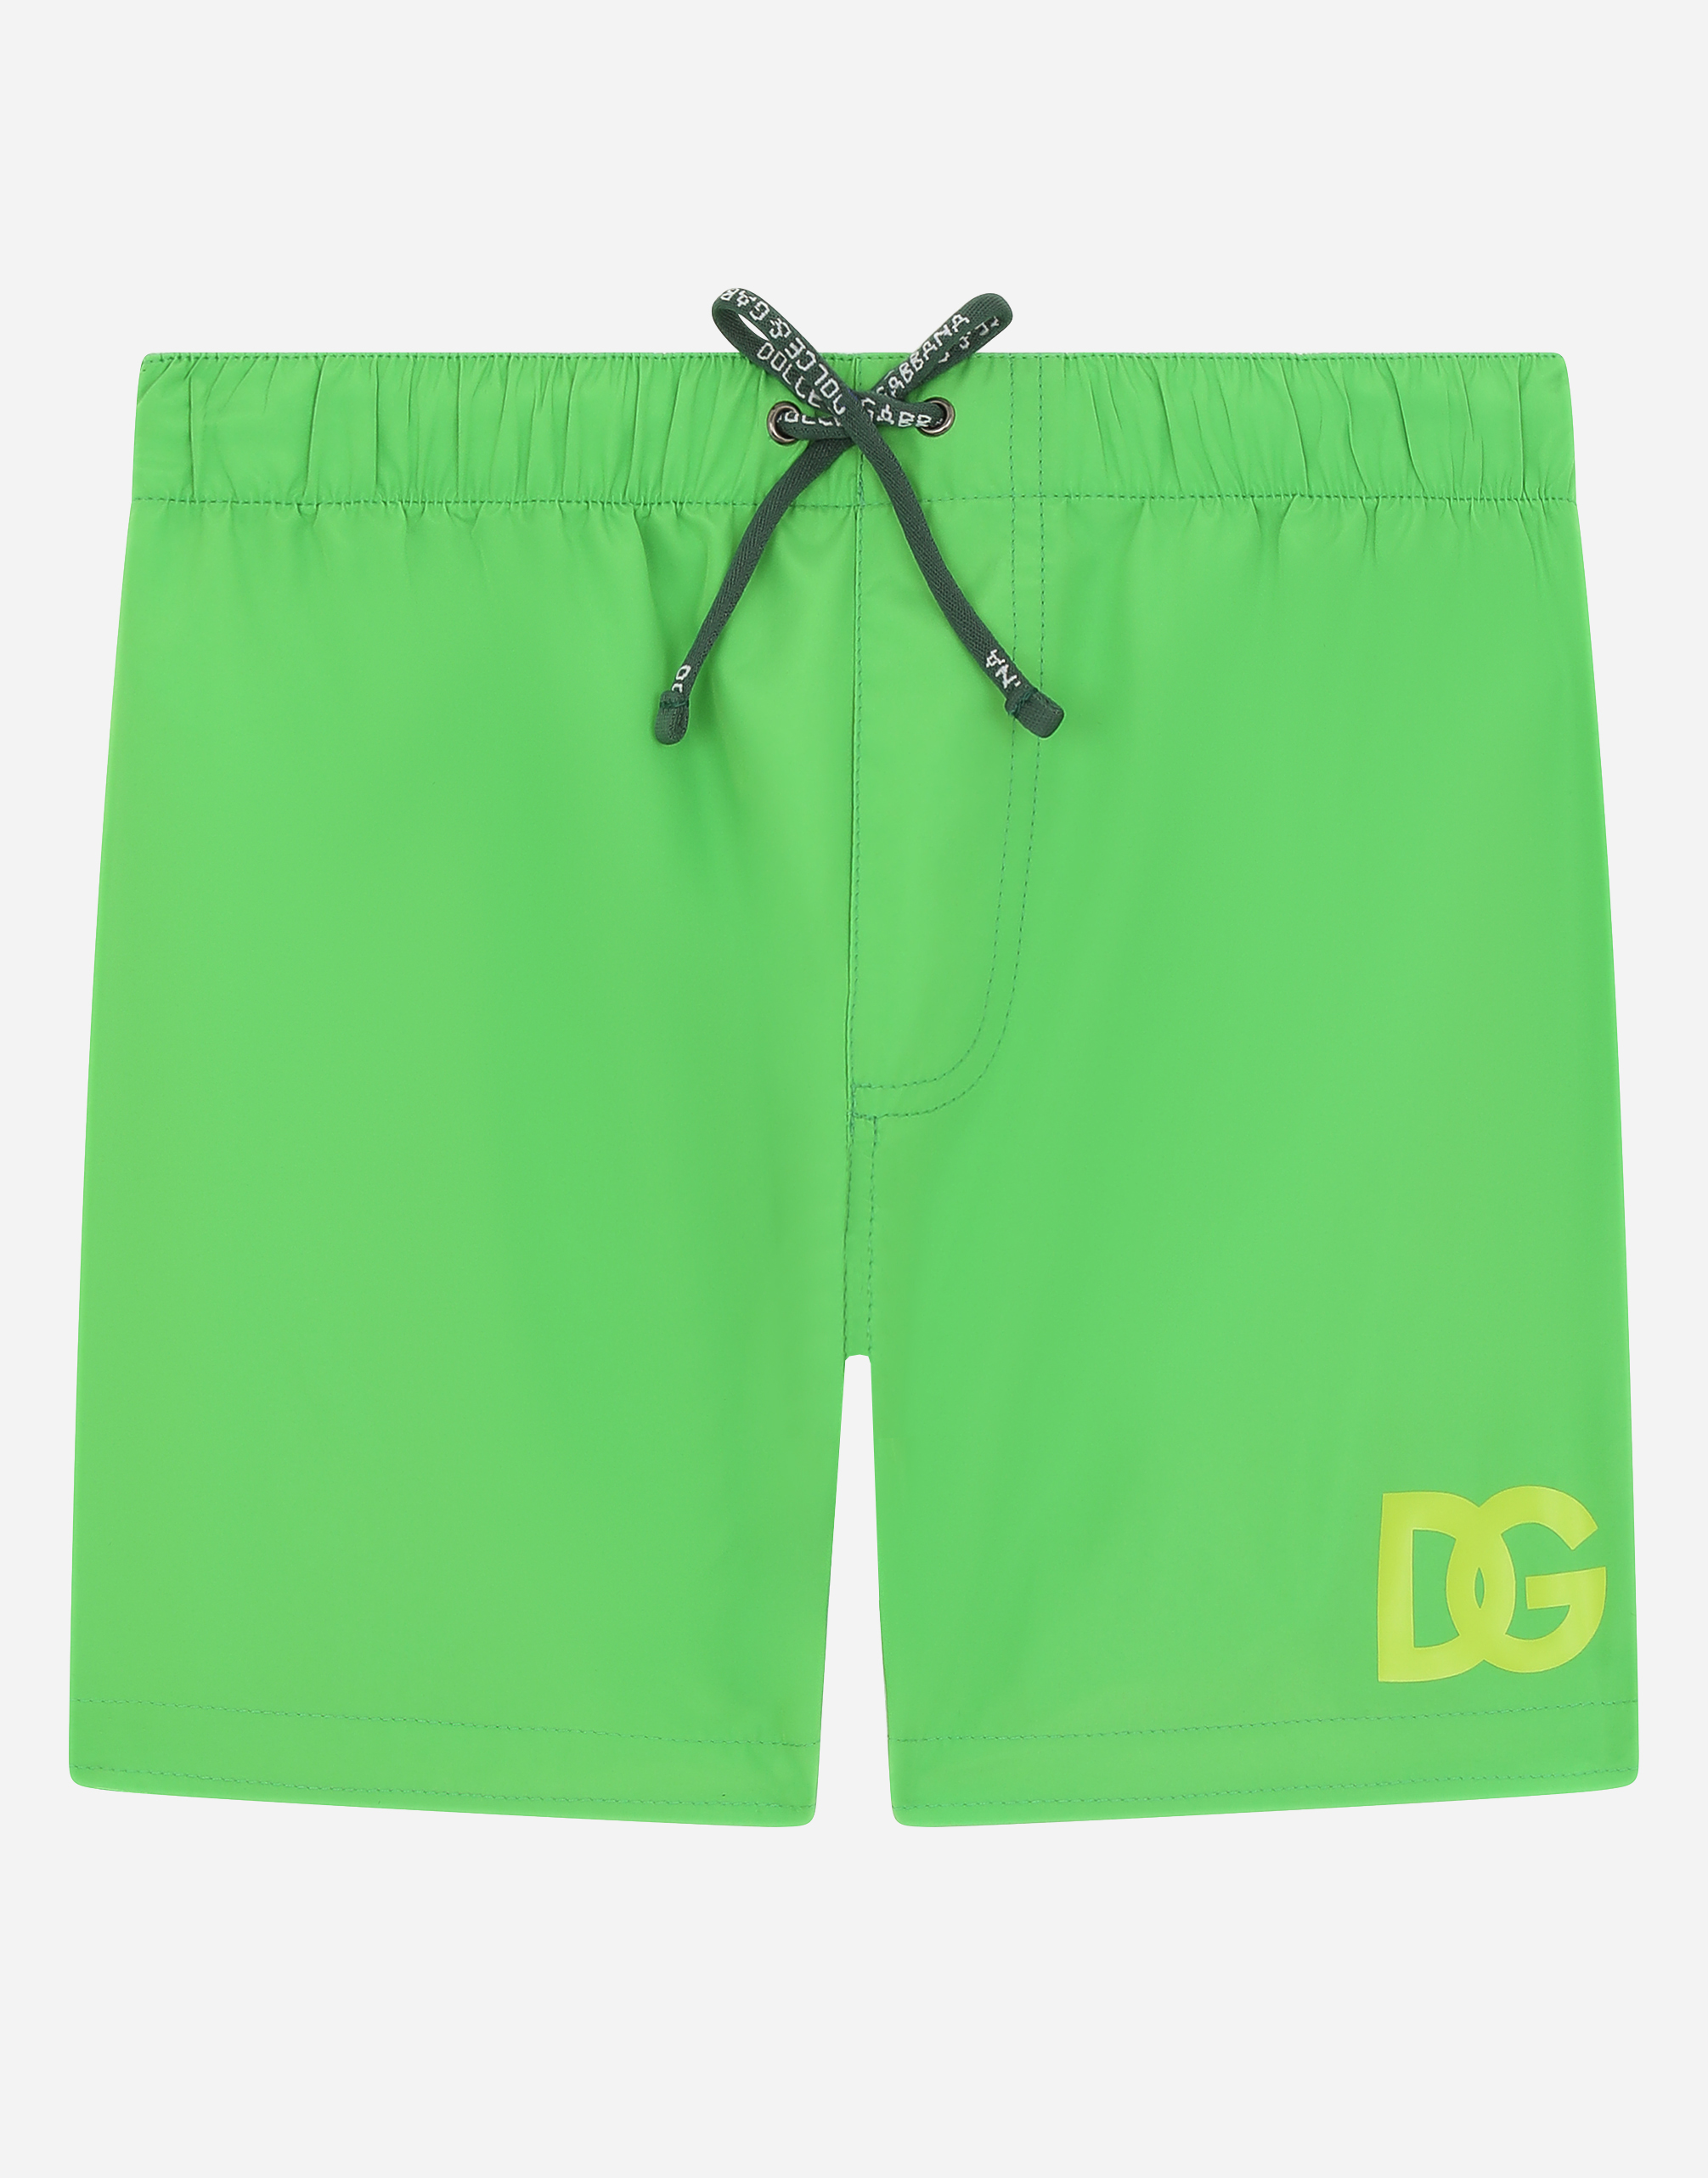 Nylon swim trunks with DG logo in Green